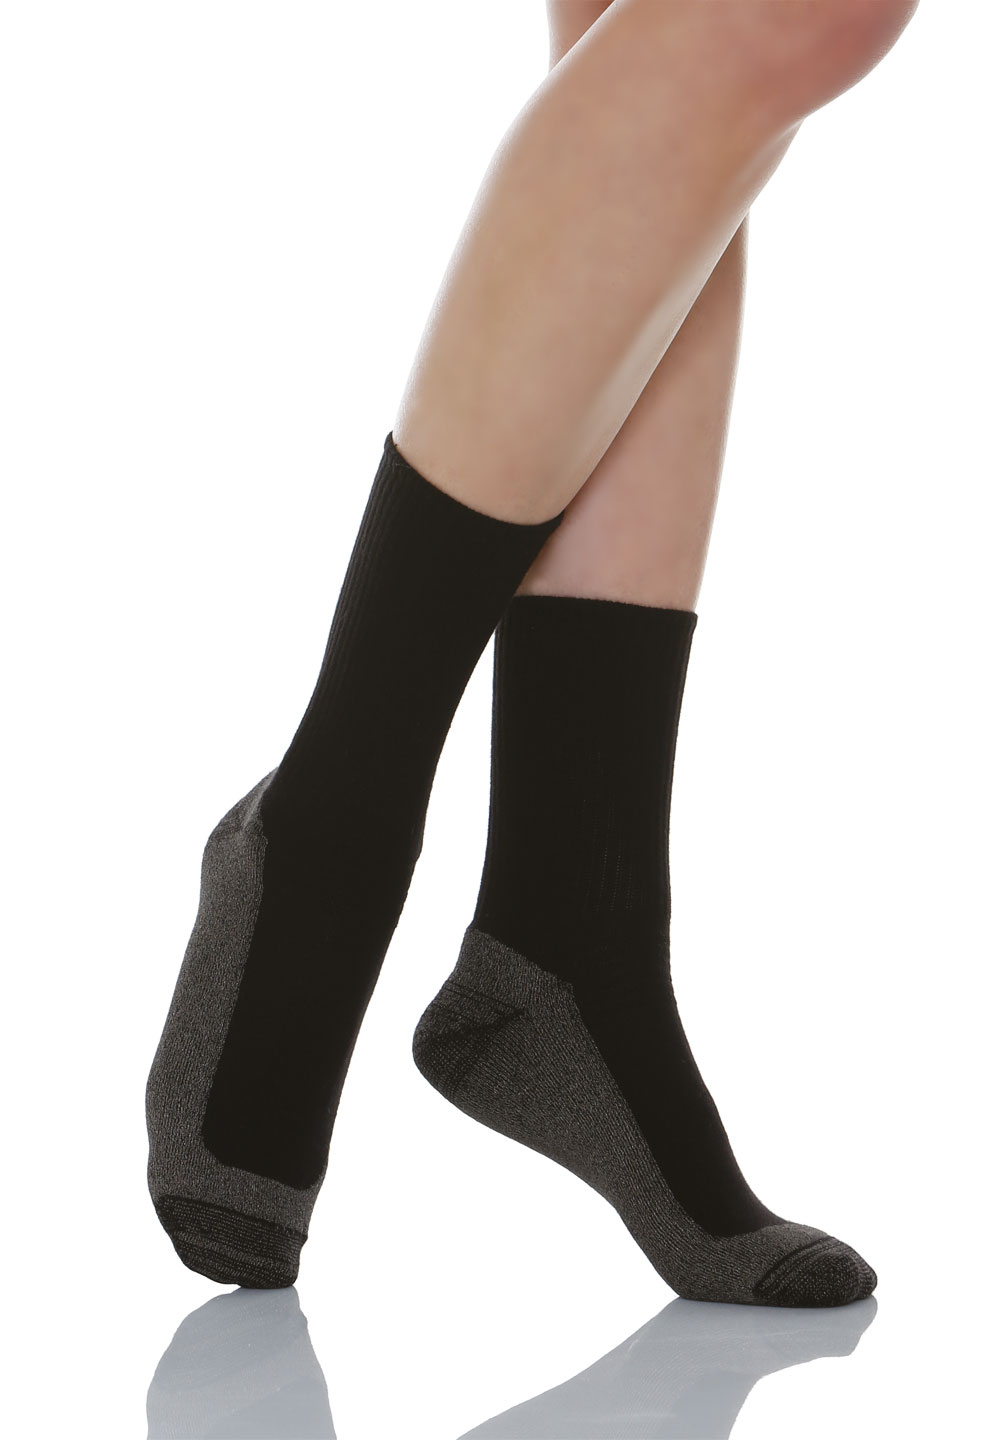 to diabetic 550P socks Aviano - fiber Relaxsan Silver Store X-Static your Buy shape body